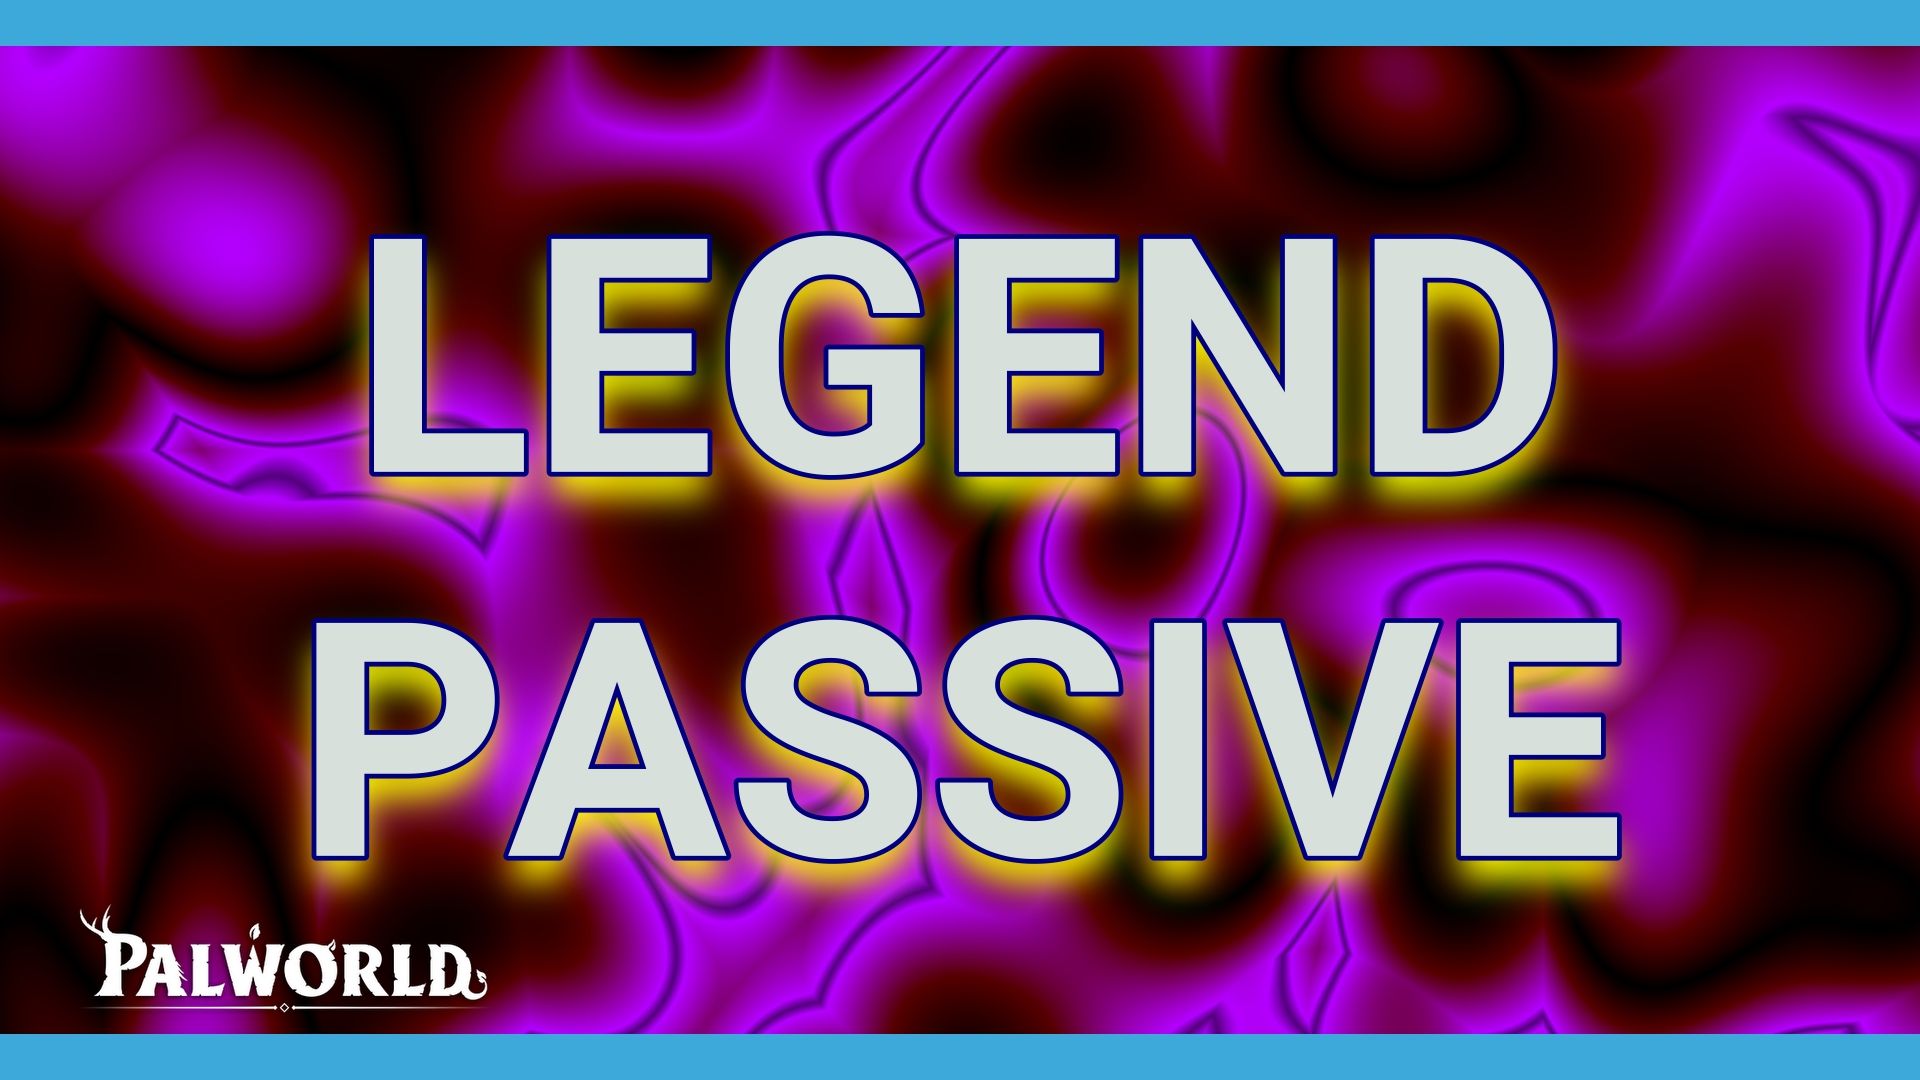 26 - palworld - legend passive - HALF border_5.26.1